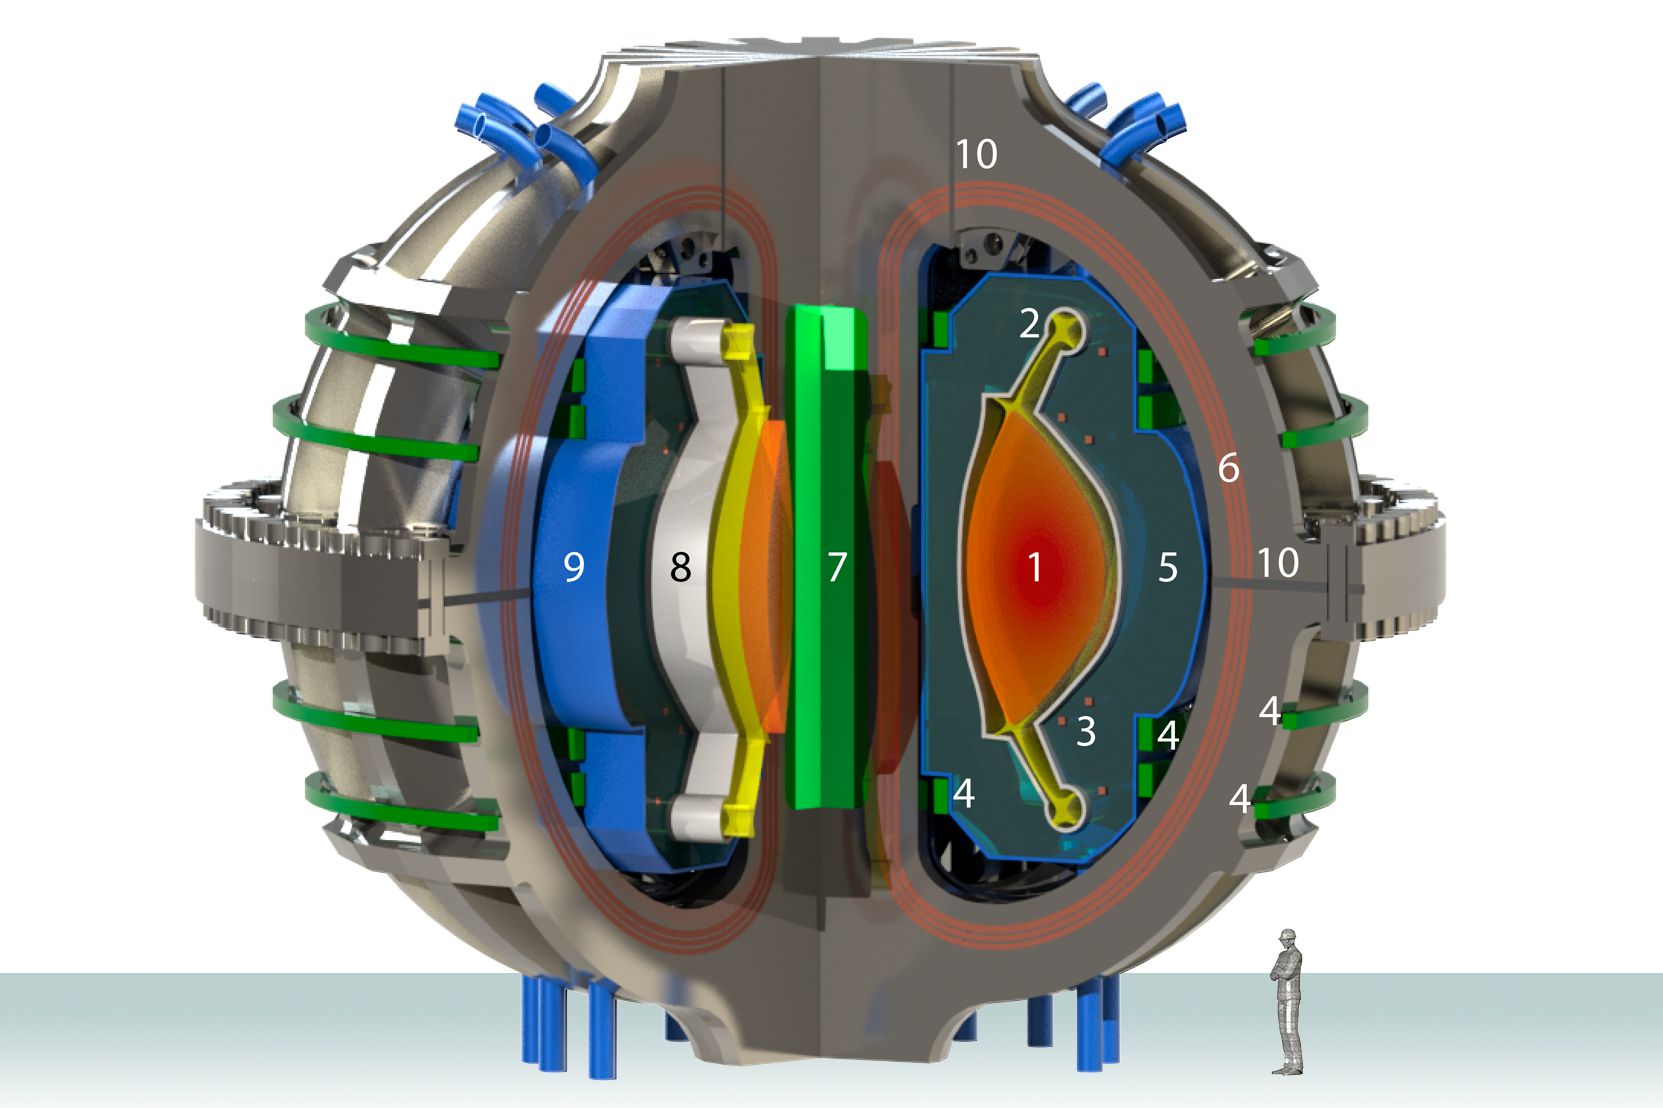 nuclear fusion reactor designs